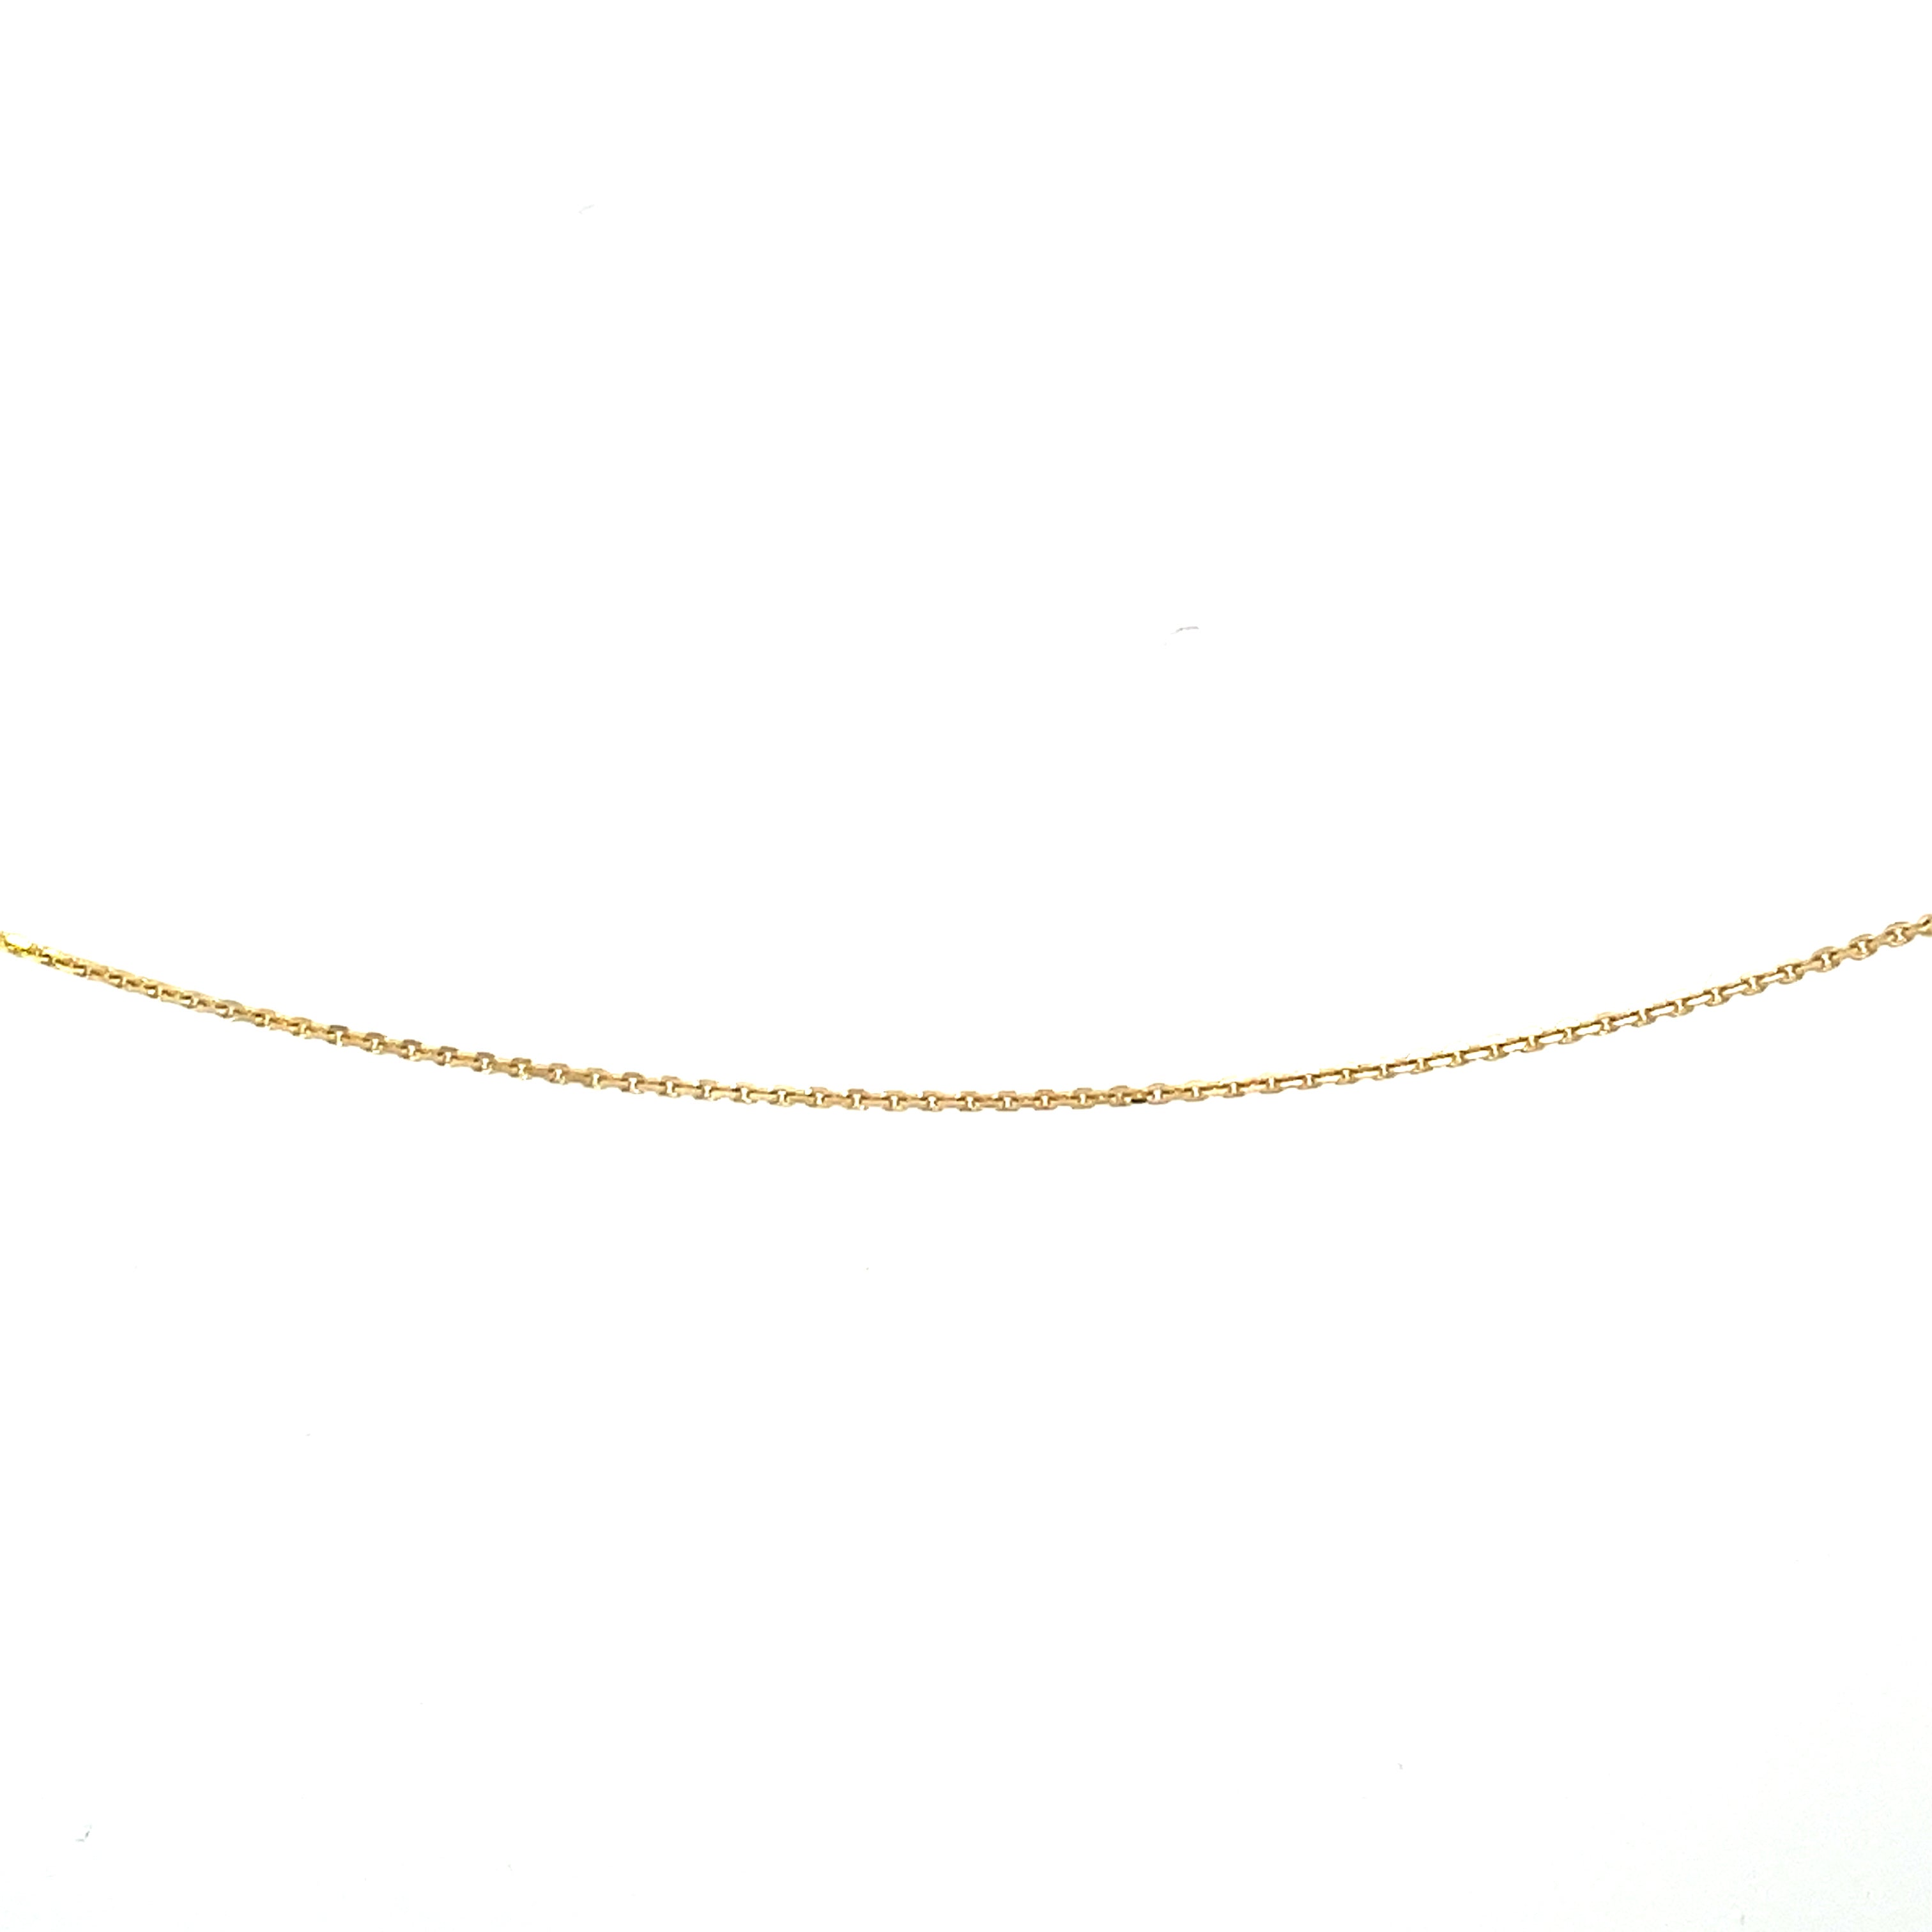 Gold Ankle Bracelet Chain